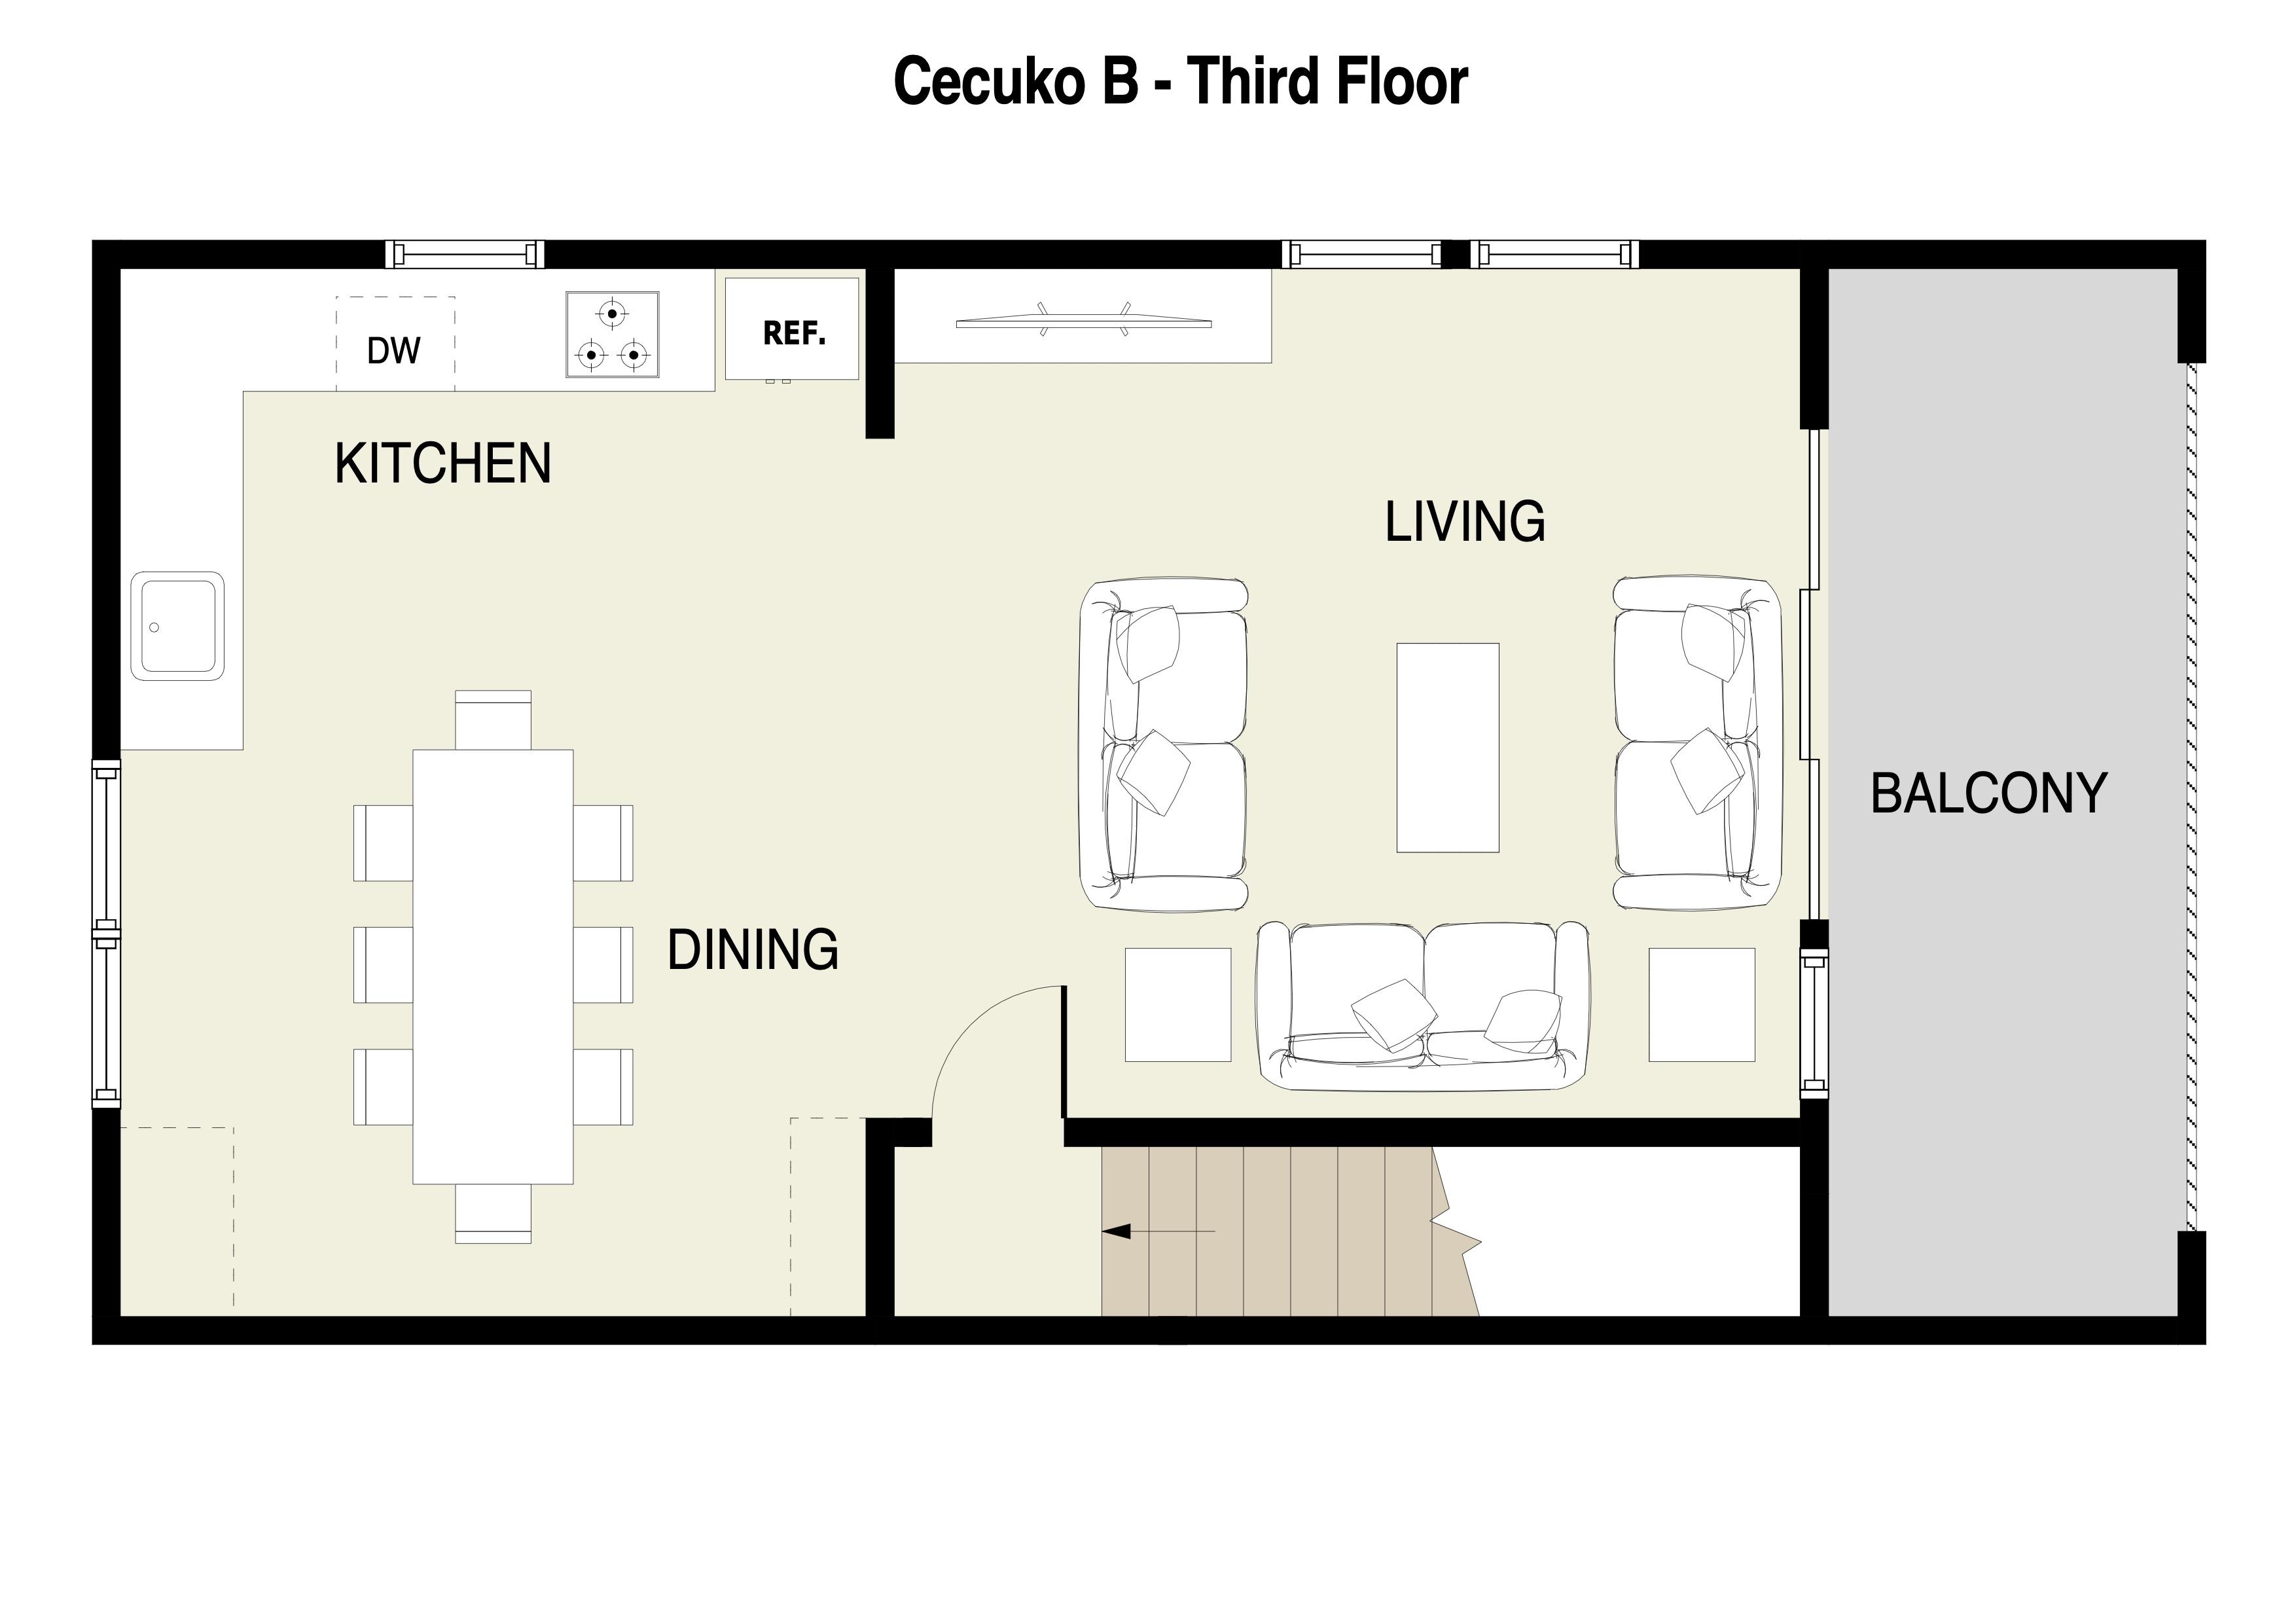 Cecuko B 3rd Floor Plans